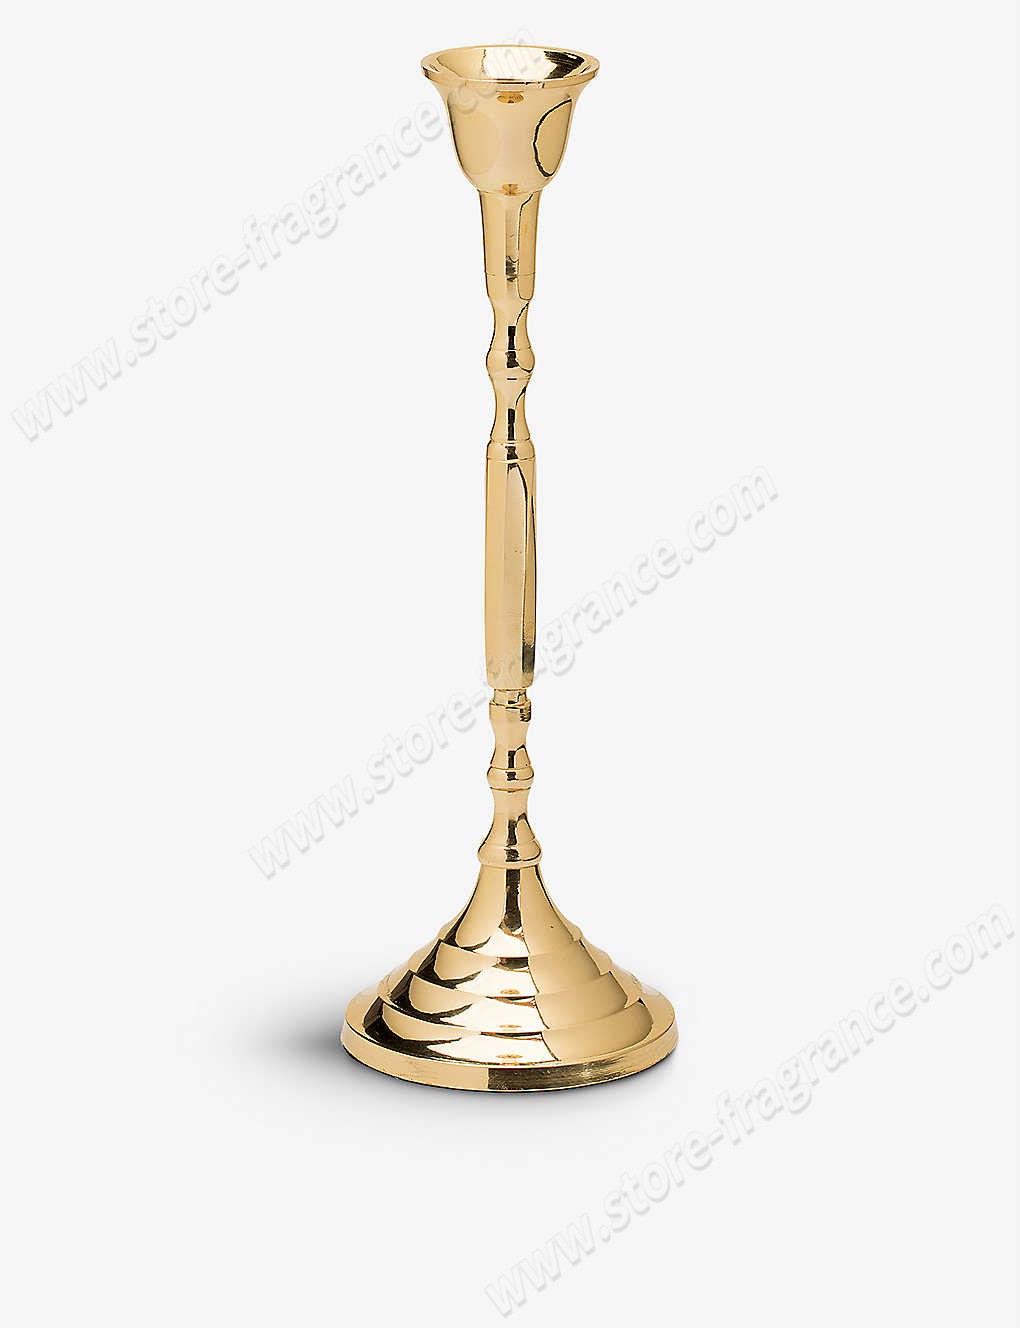 ANNA + NINA/Gold-toned brass candle holder 23cm ✿ Discount Store - ANNA + NINA/Gold-toned brass candle holder 23cm ✿ Discount Store